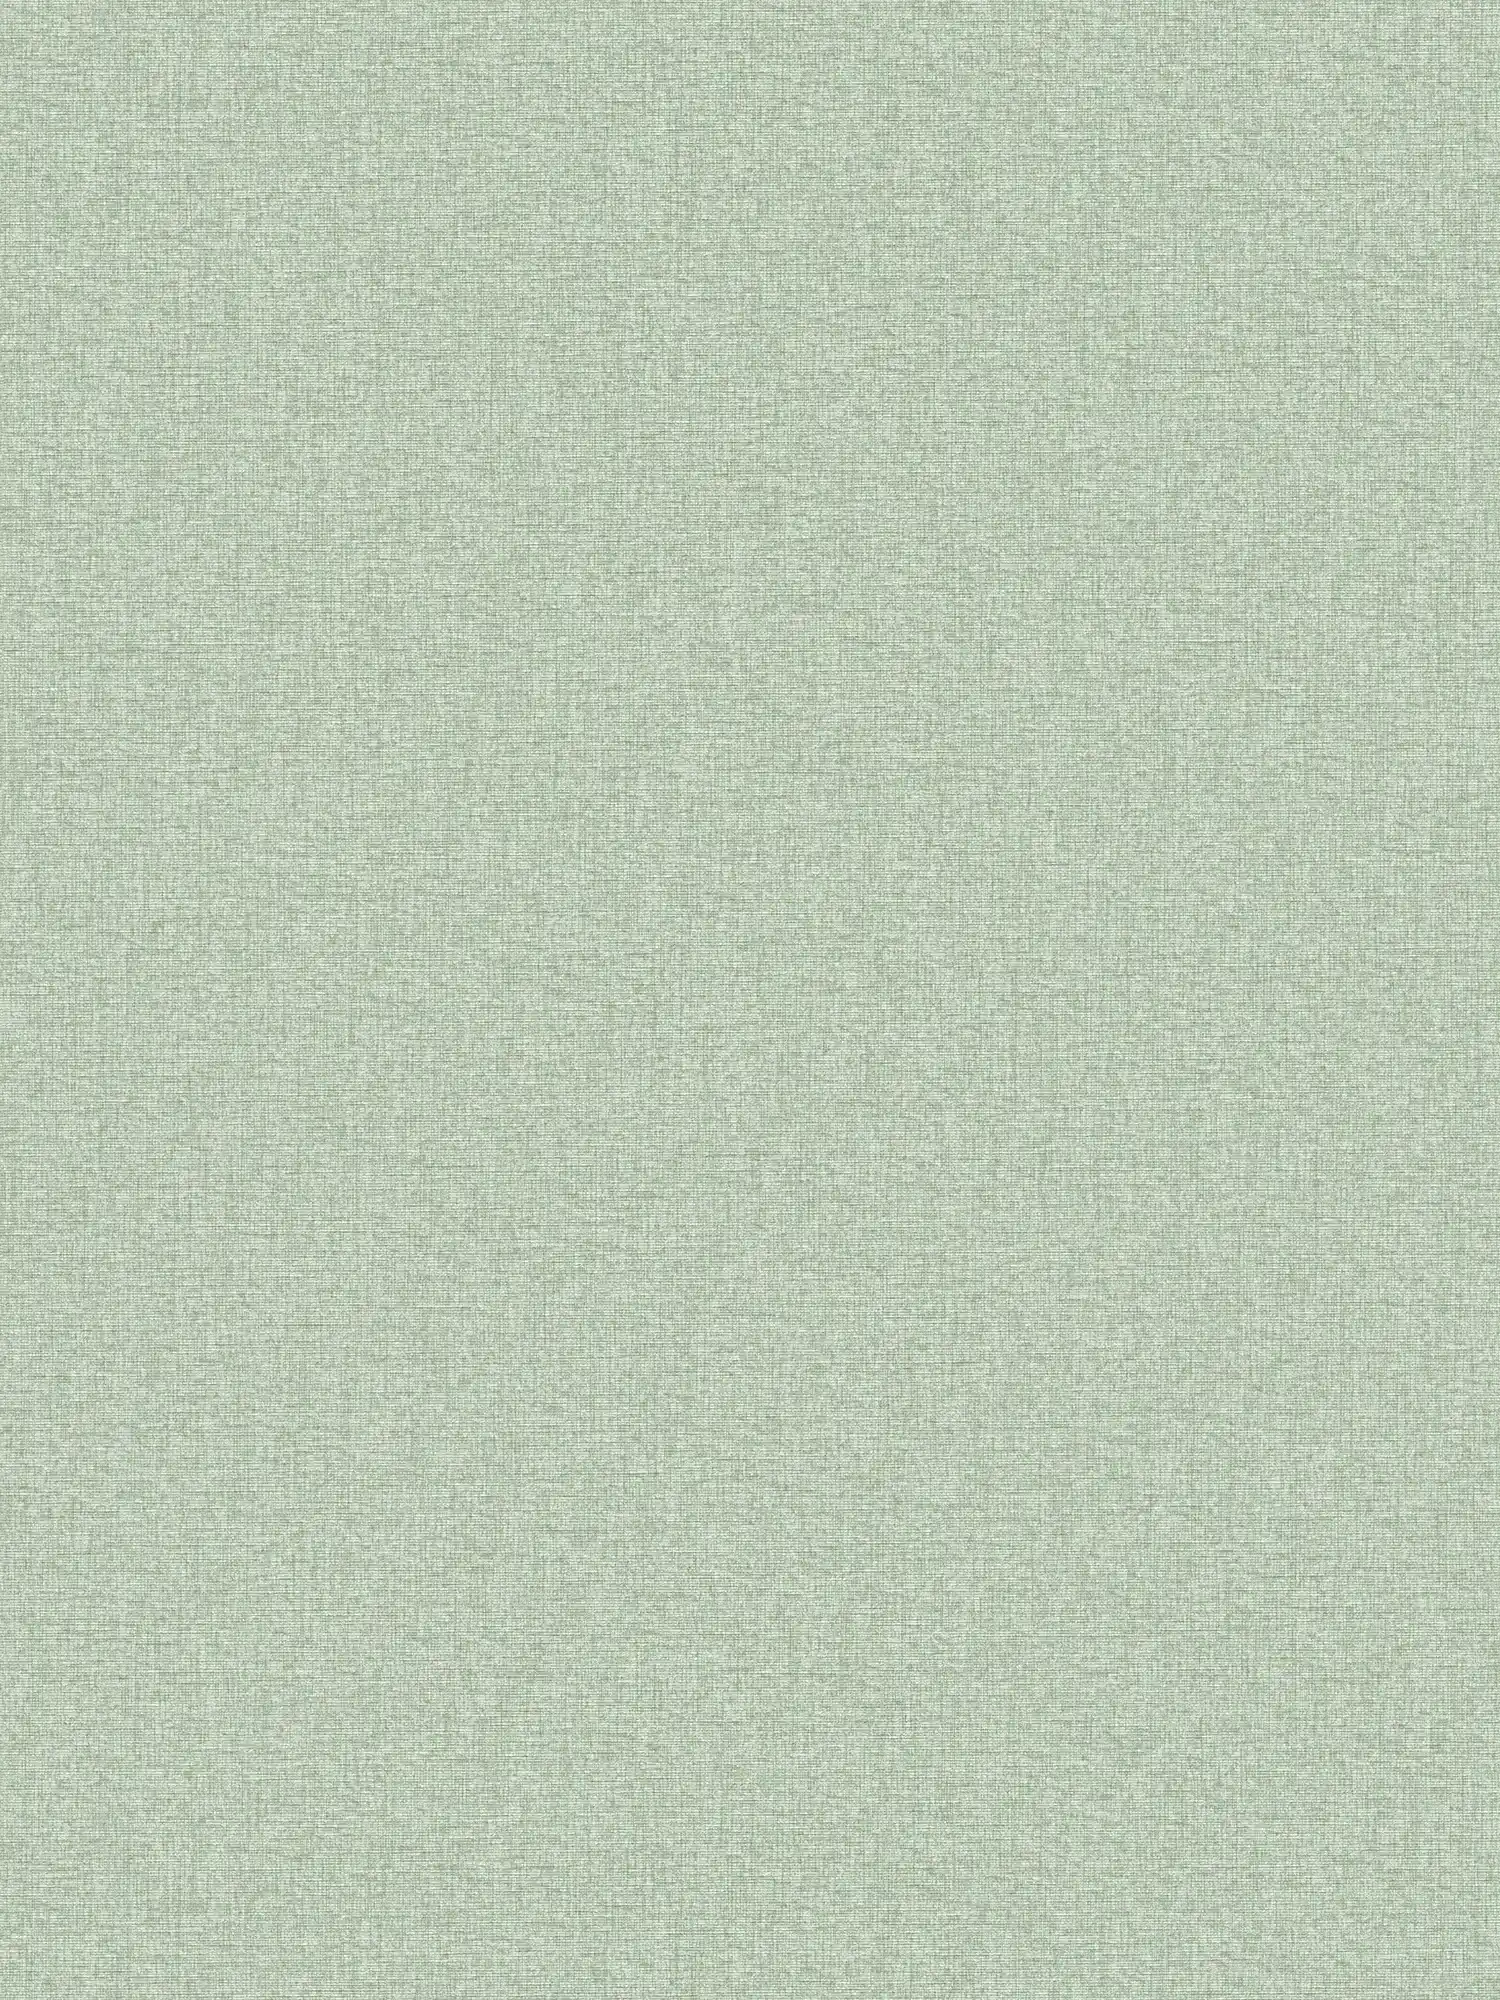 Carta da parati liscia in tessuto con struttura leggera, opaca - verde
